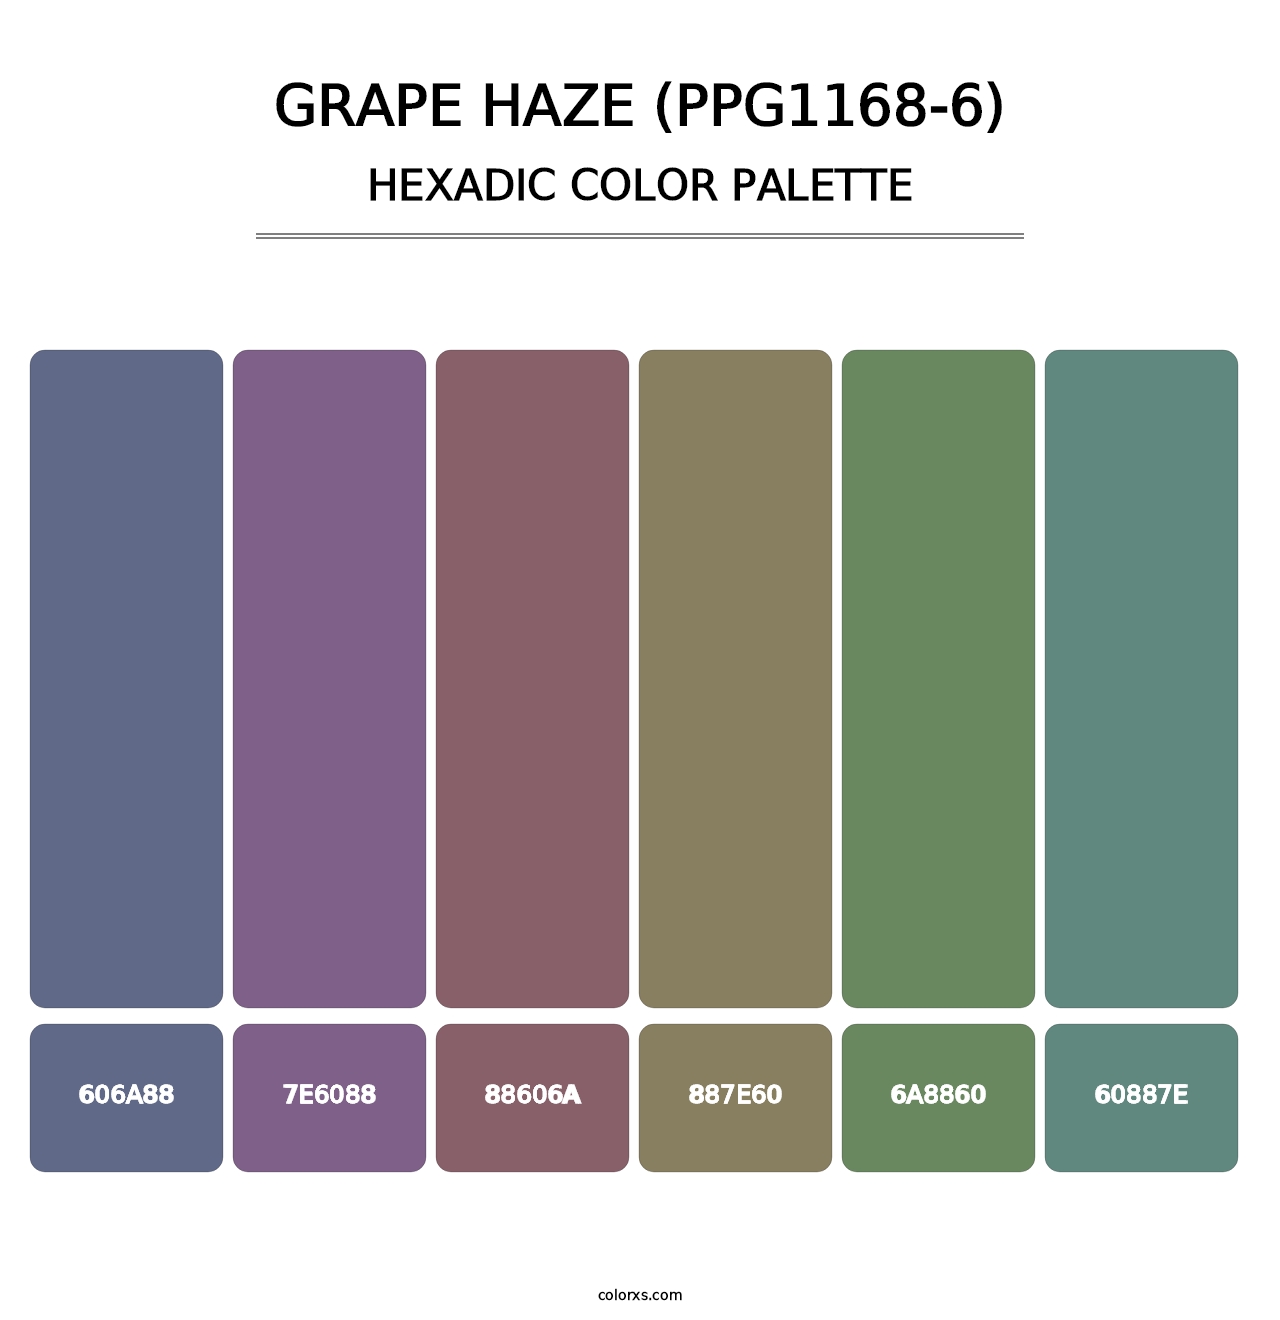 Grape Haze (PPG1168-6) - Hexadic Color Palette